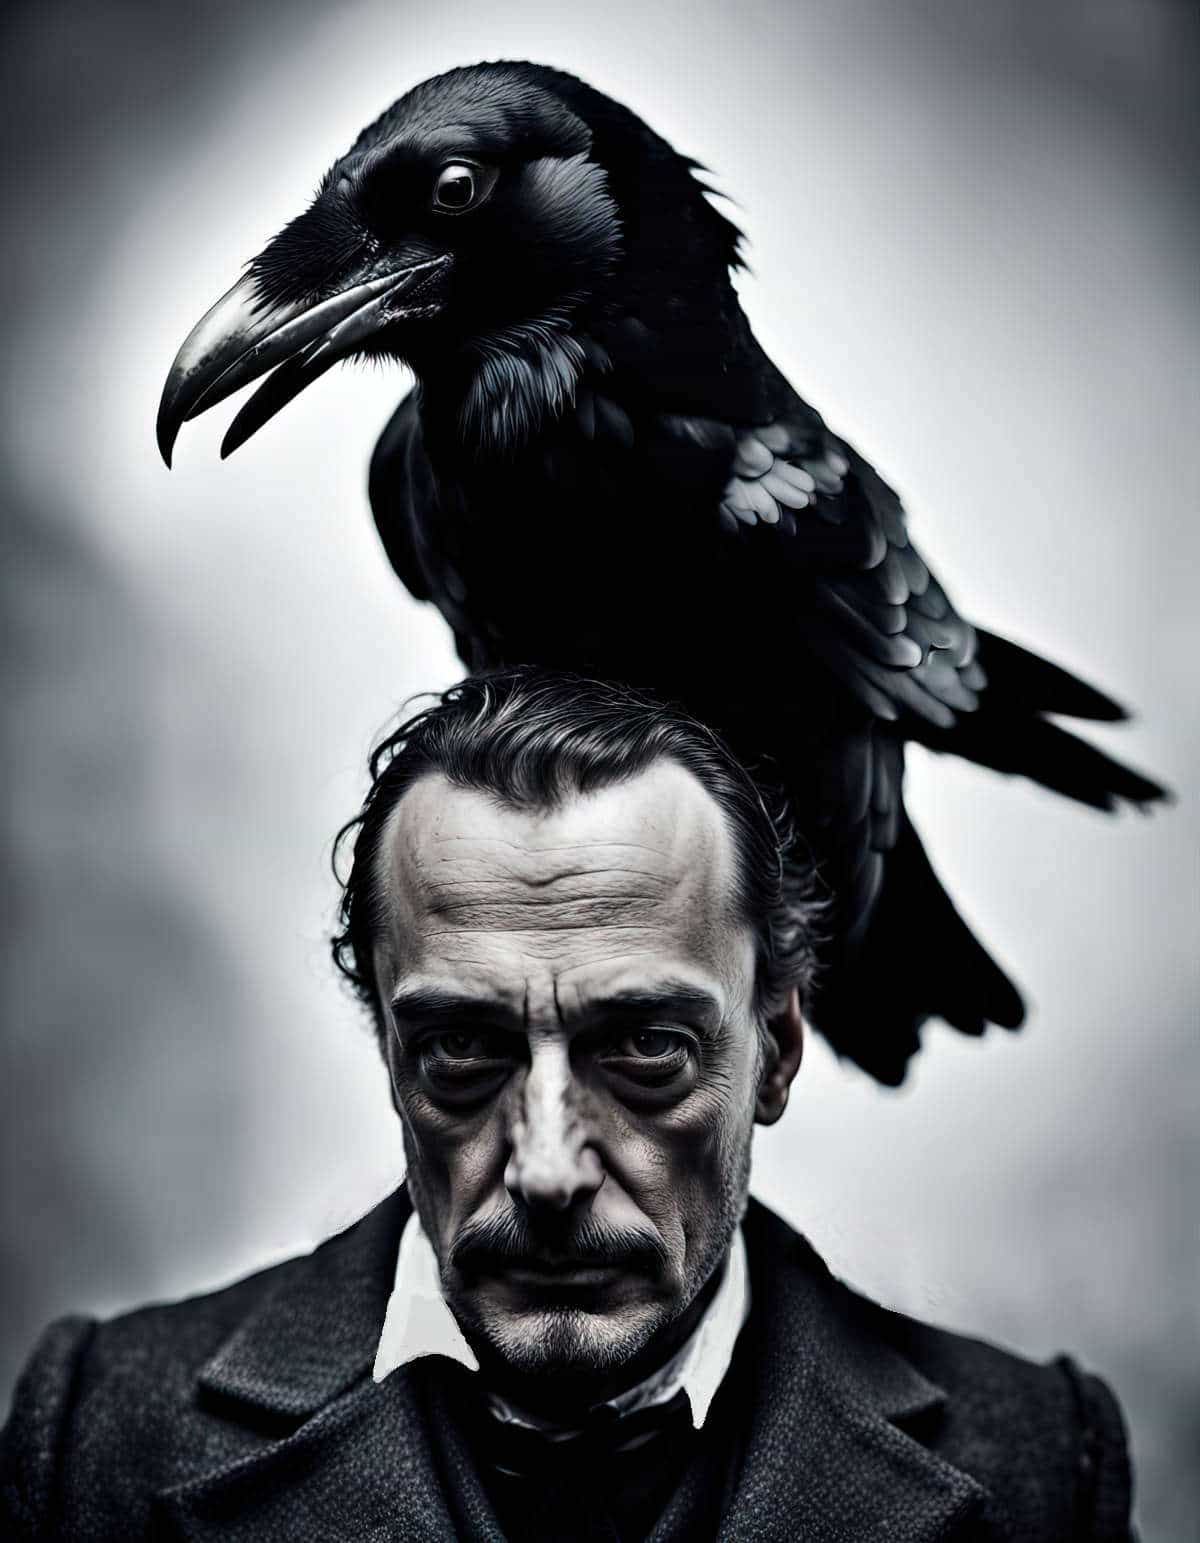 Raven and Crow Symbolism